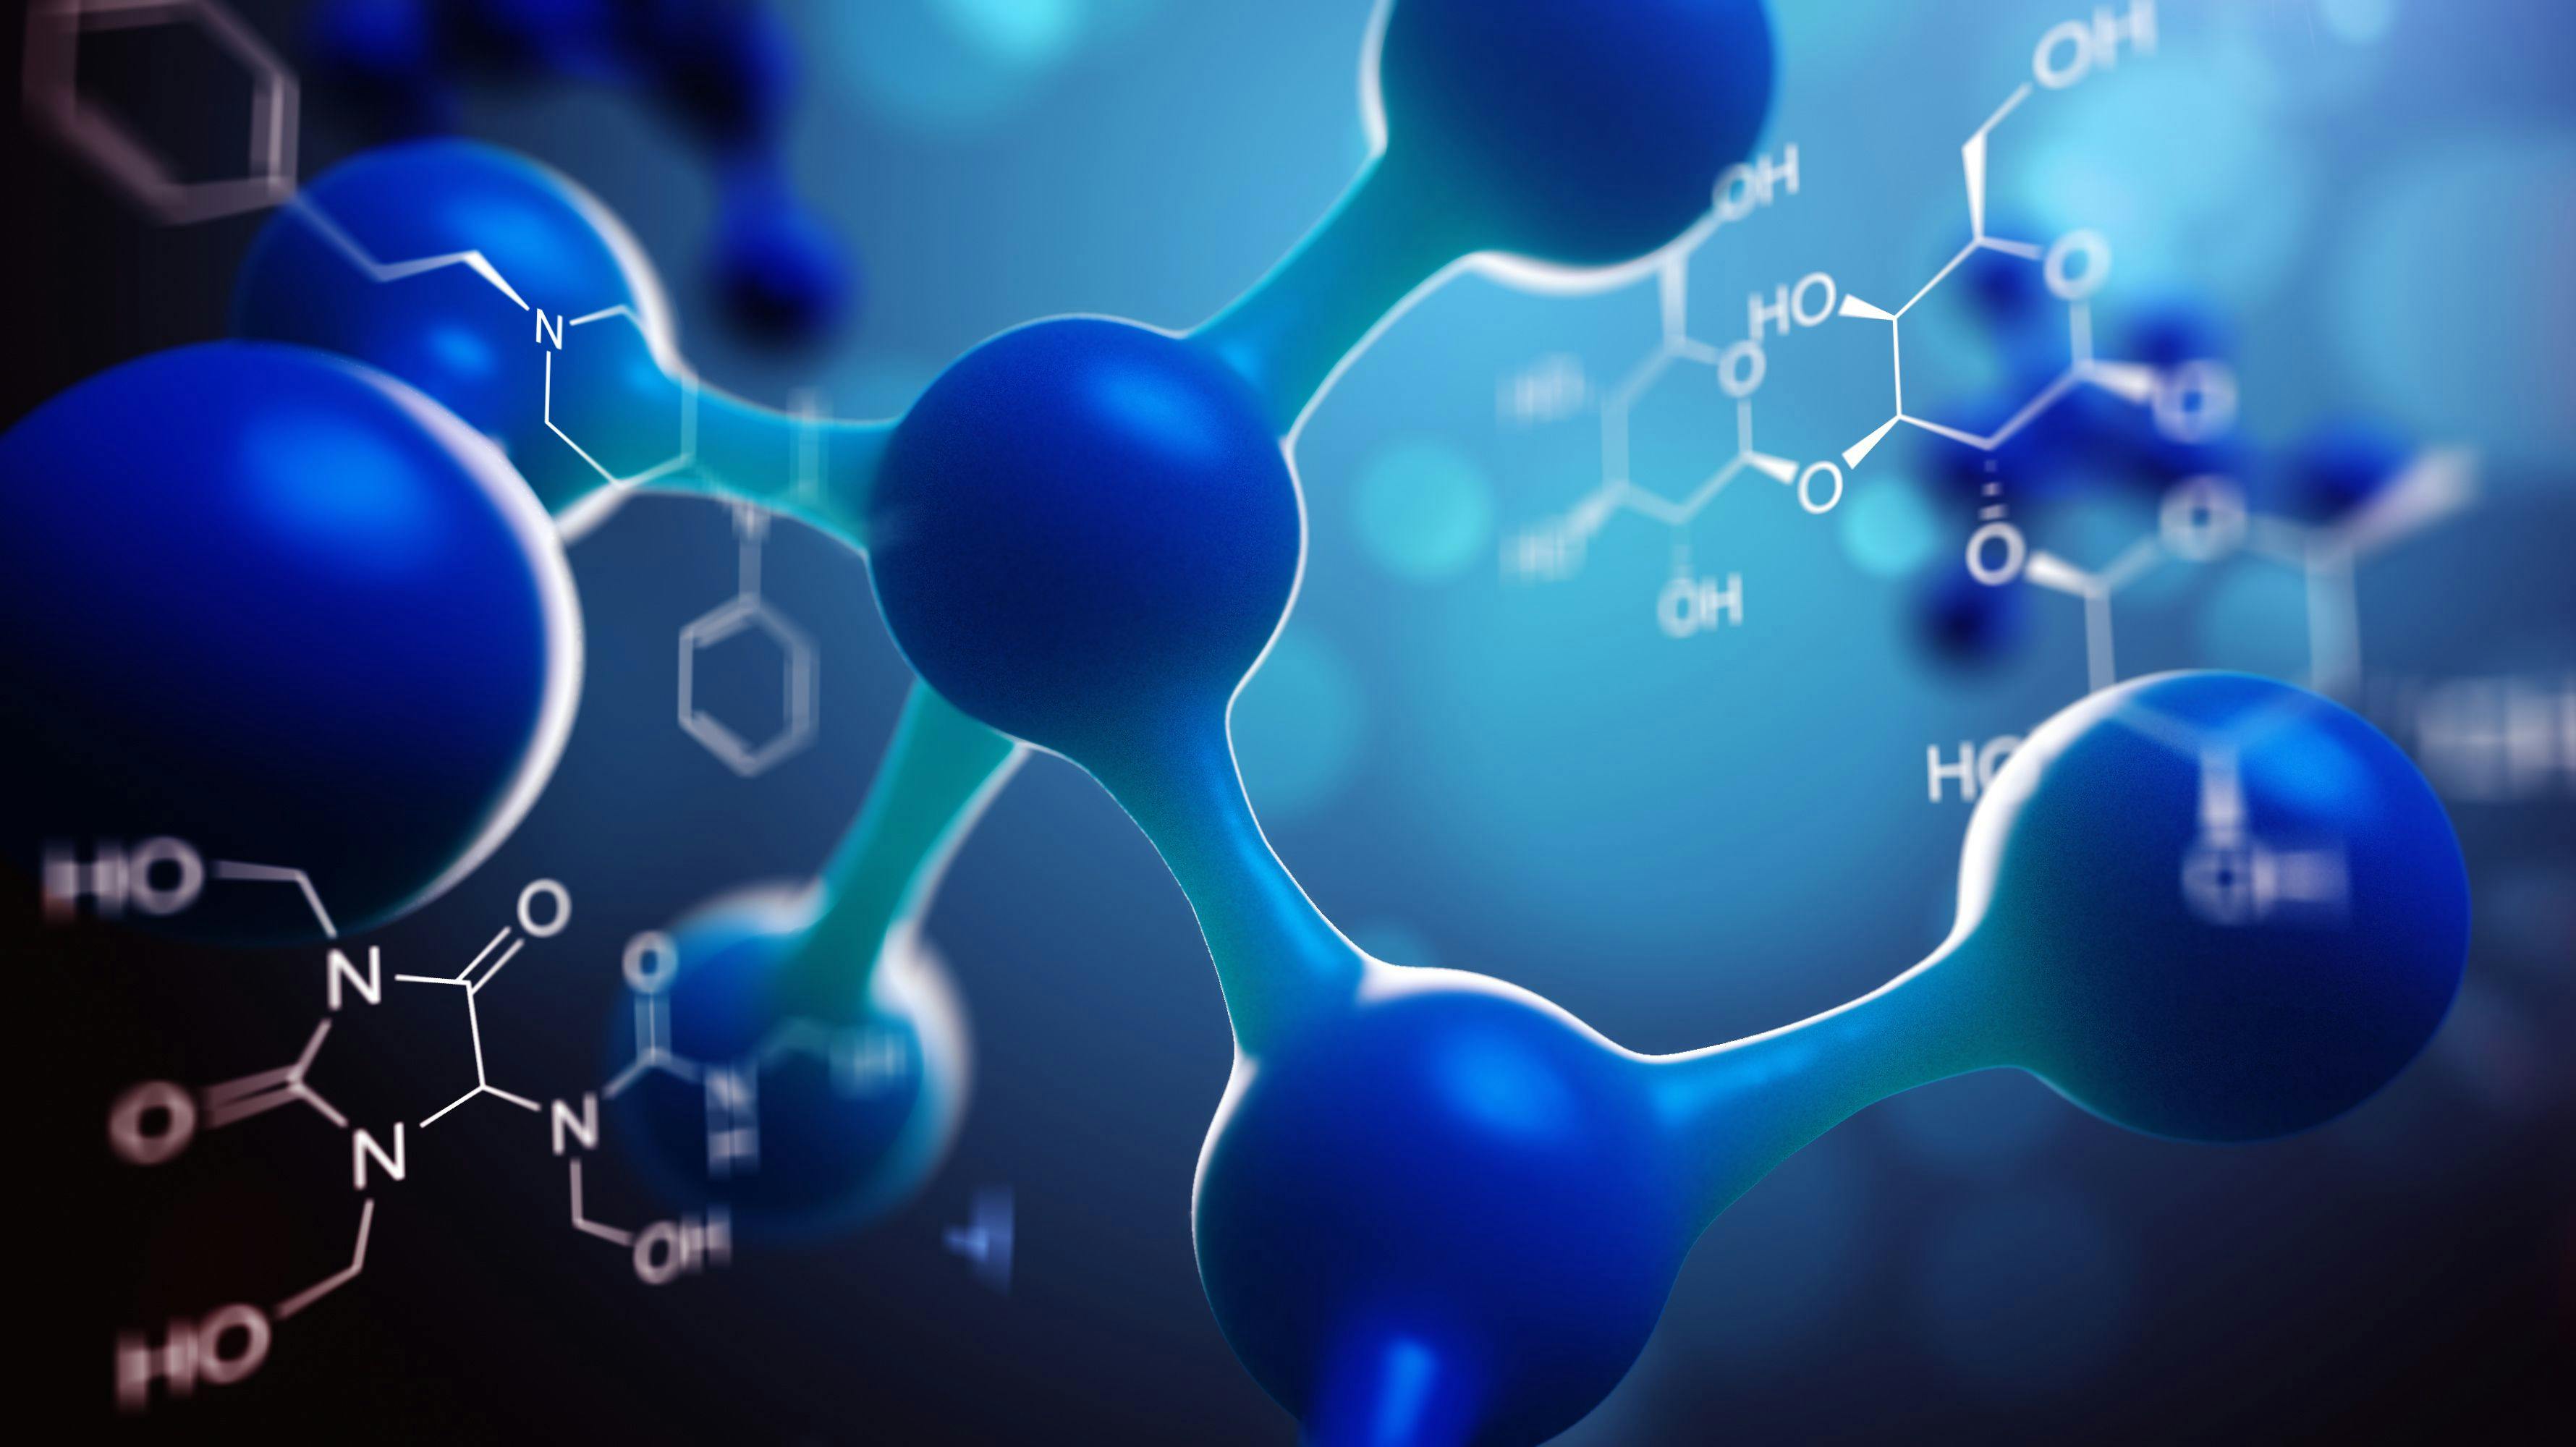 molecules against a dark blue background